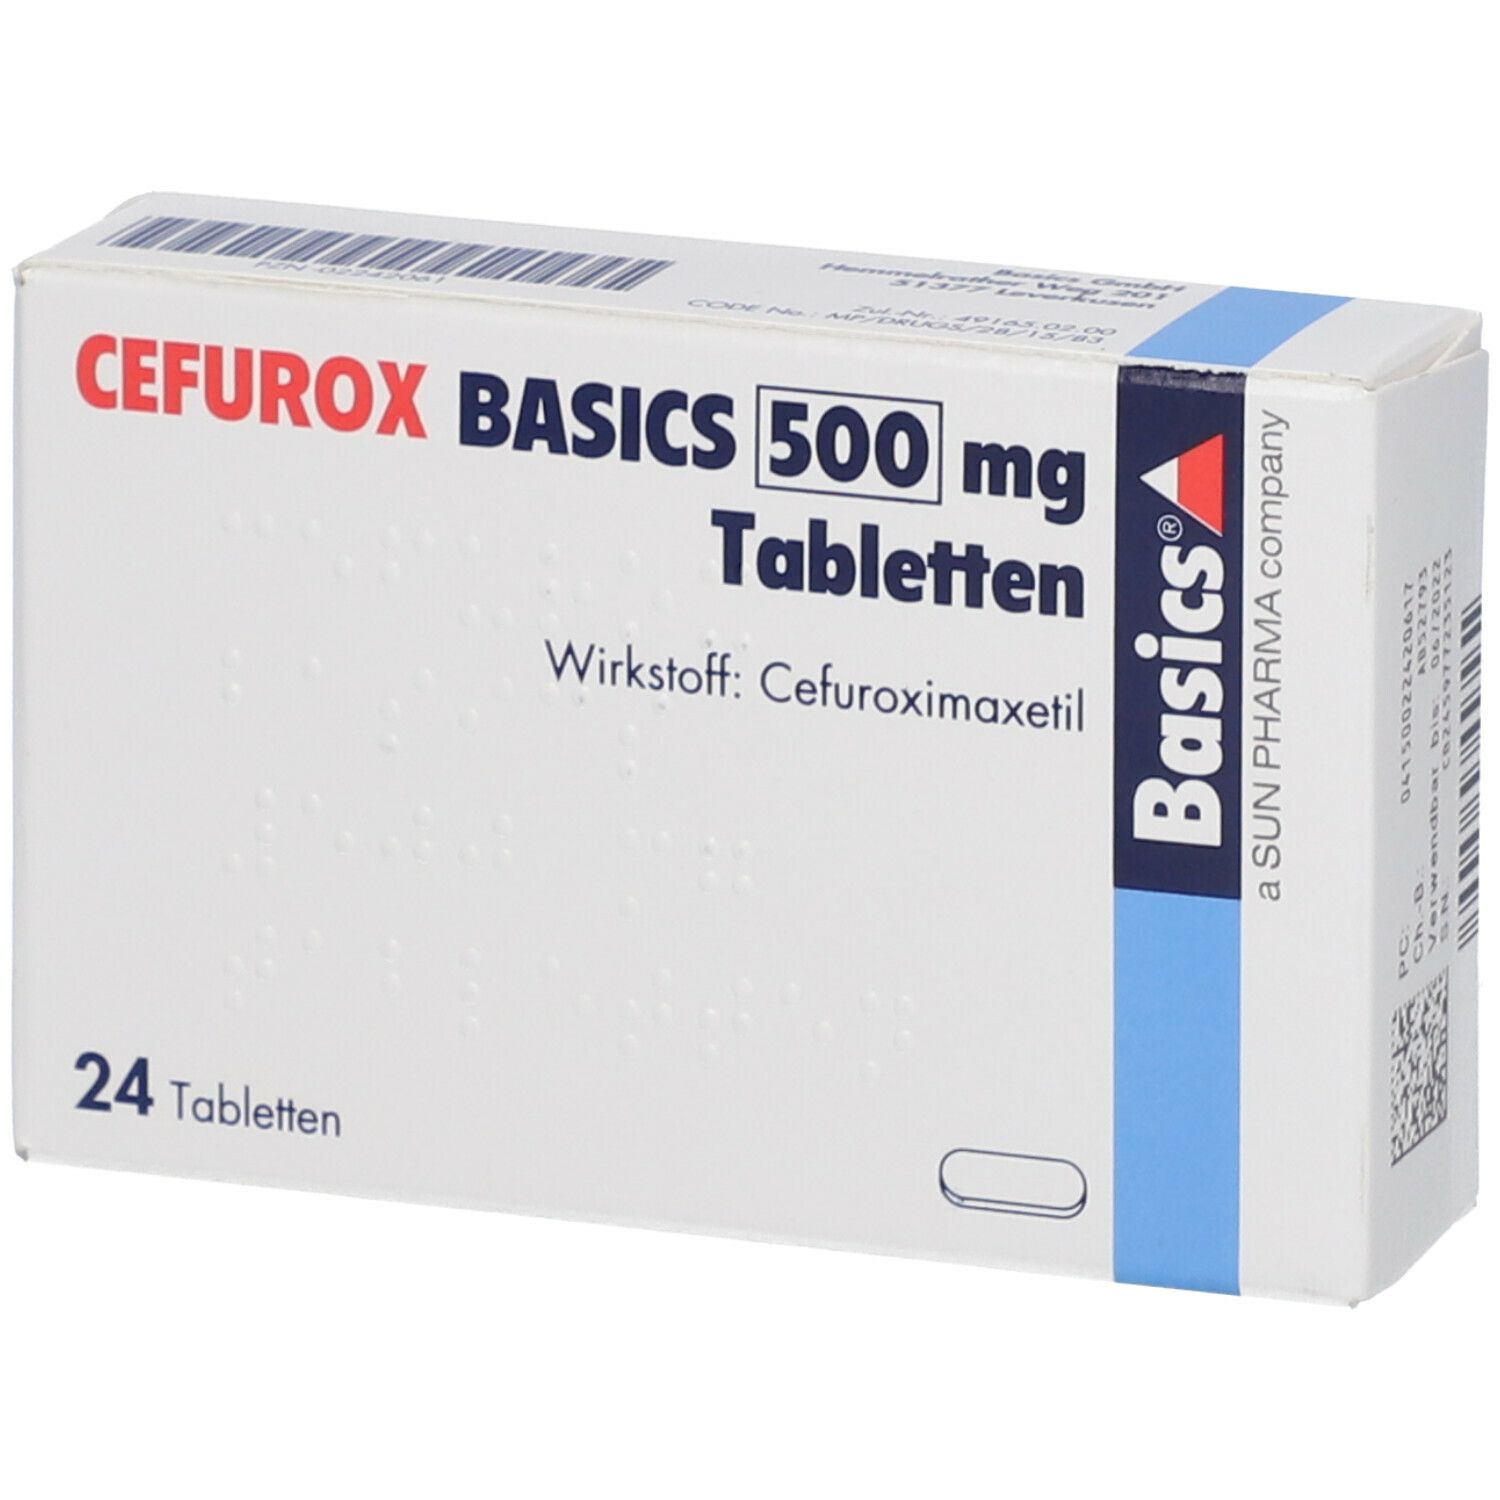 CEFUROX BASICS 500 mg.